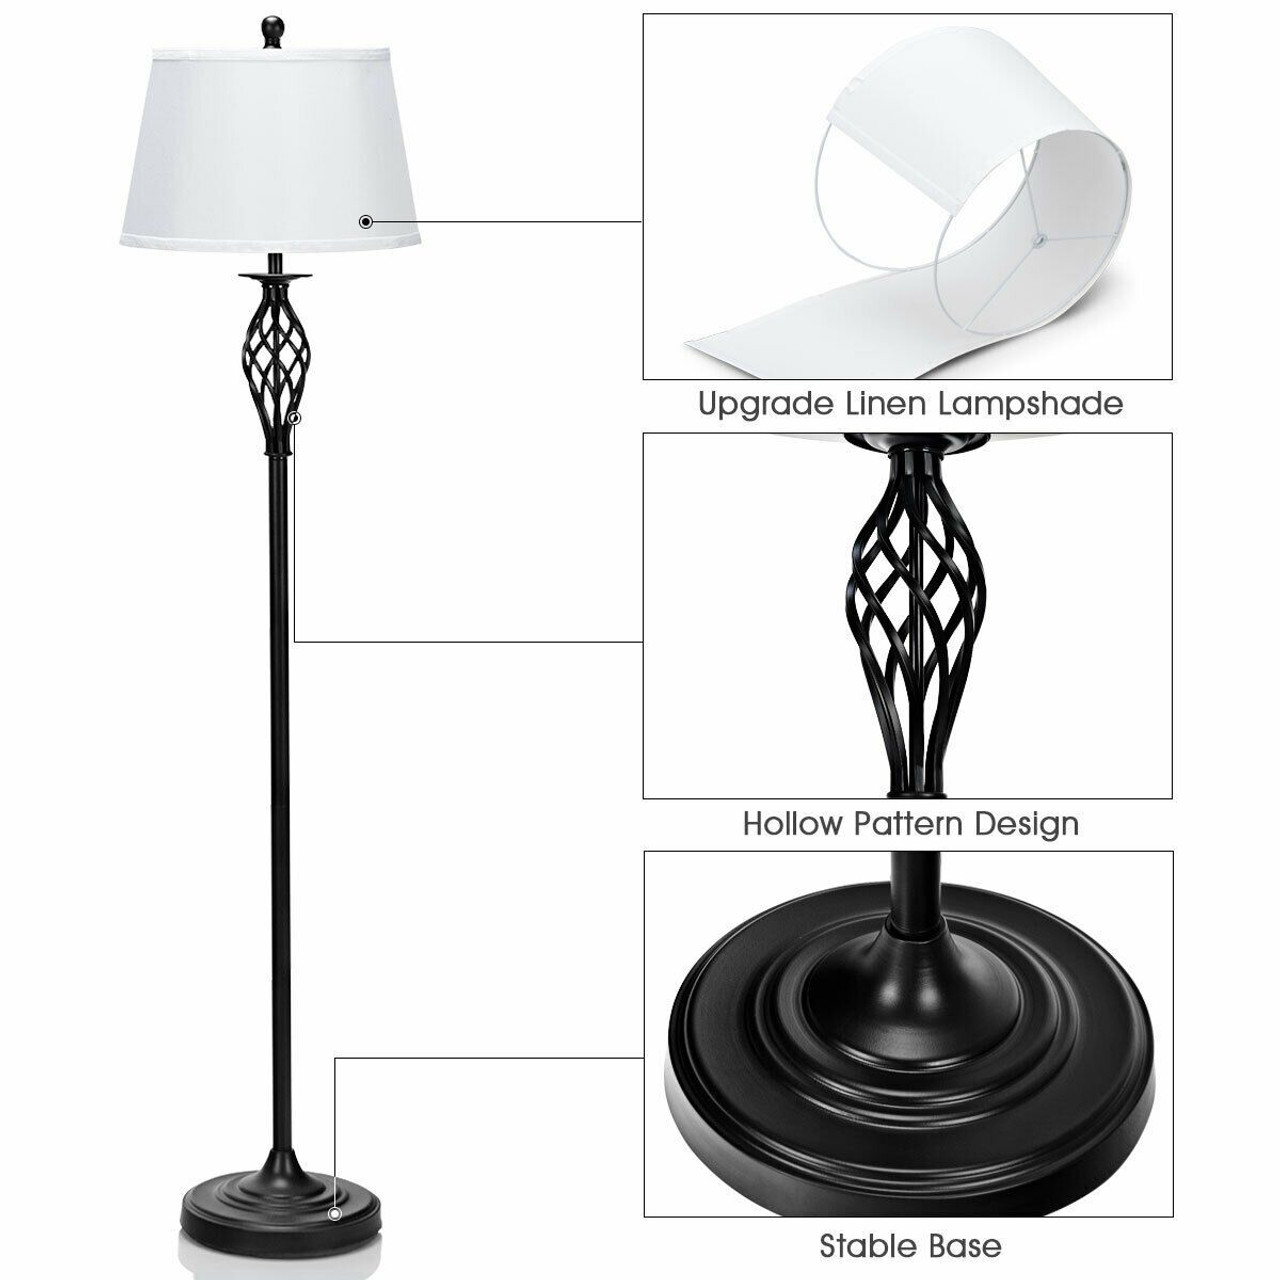 Costway 3-Piece Lamp Set product image